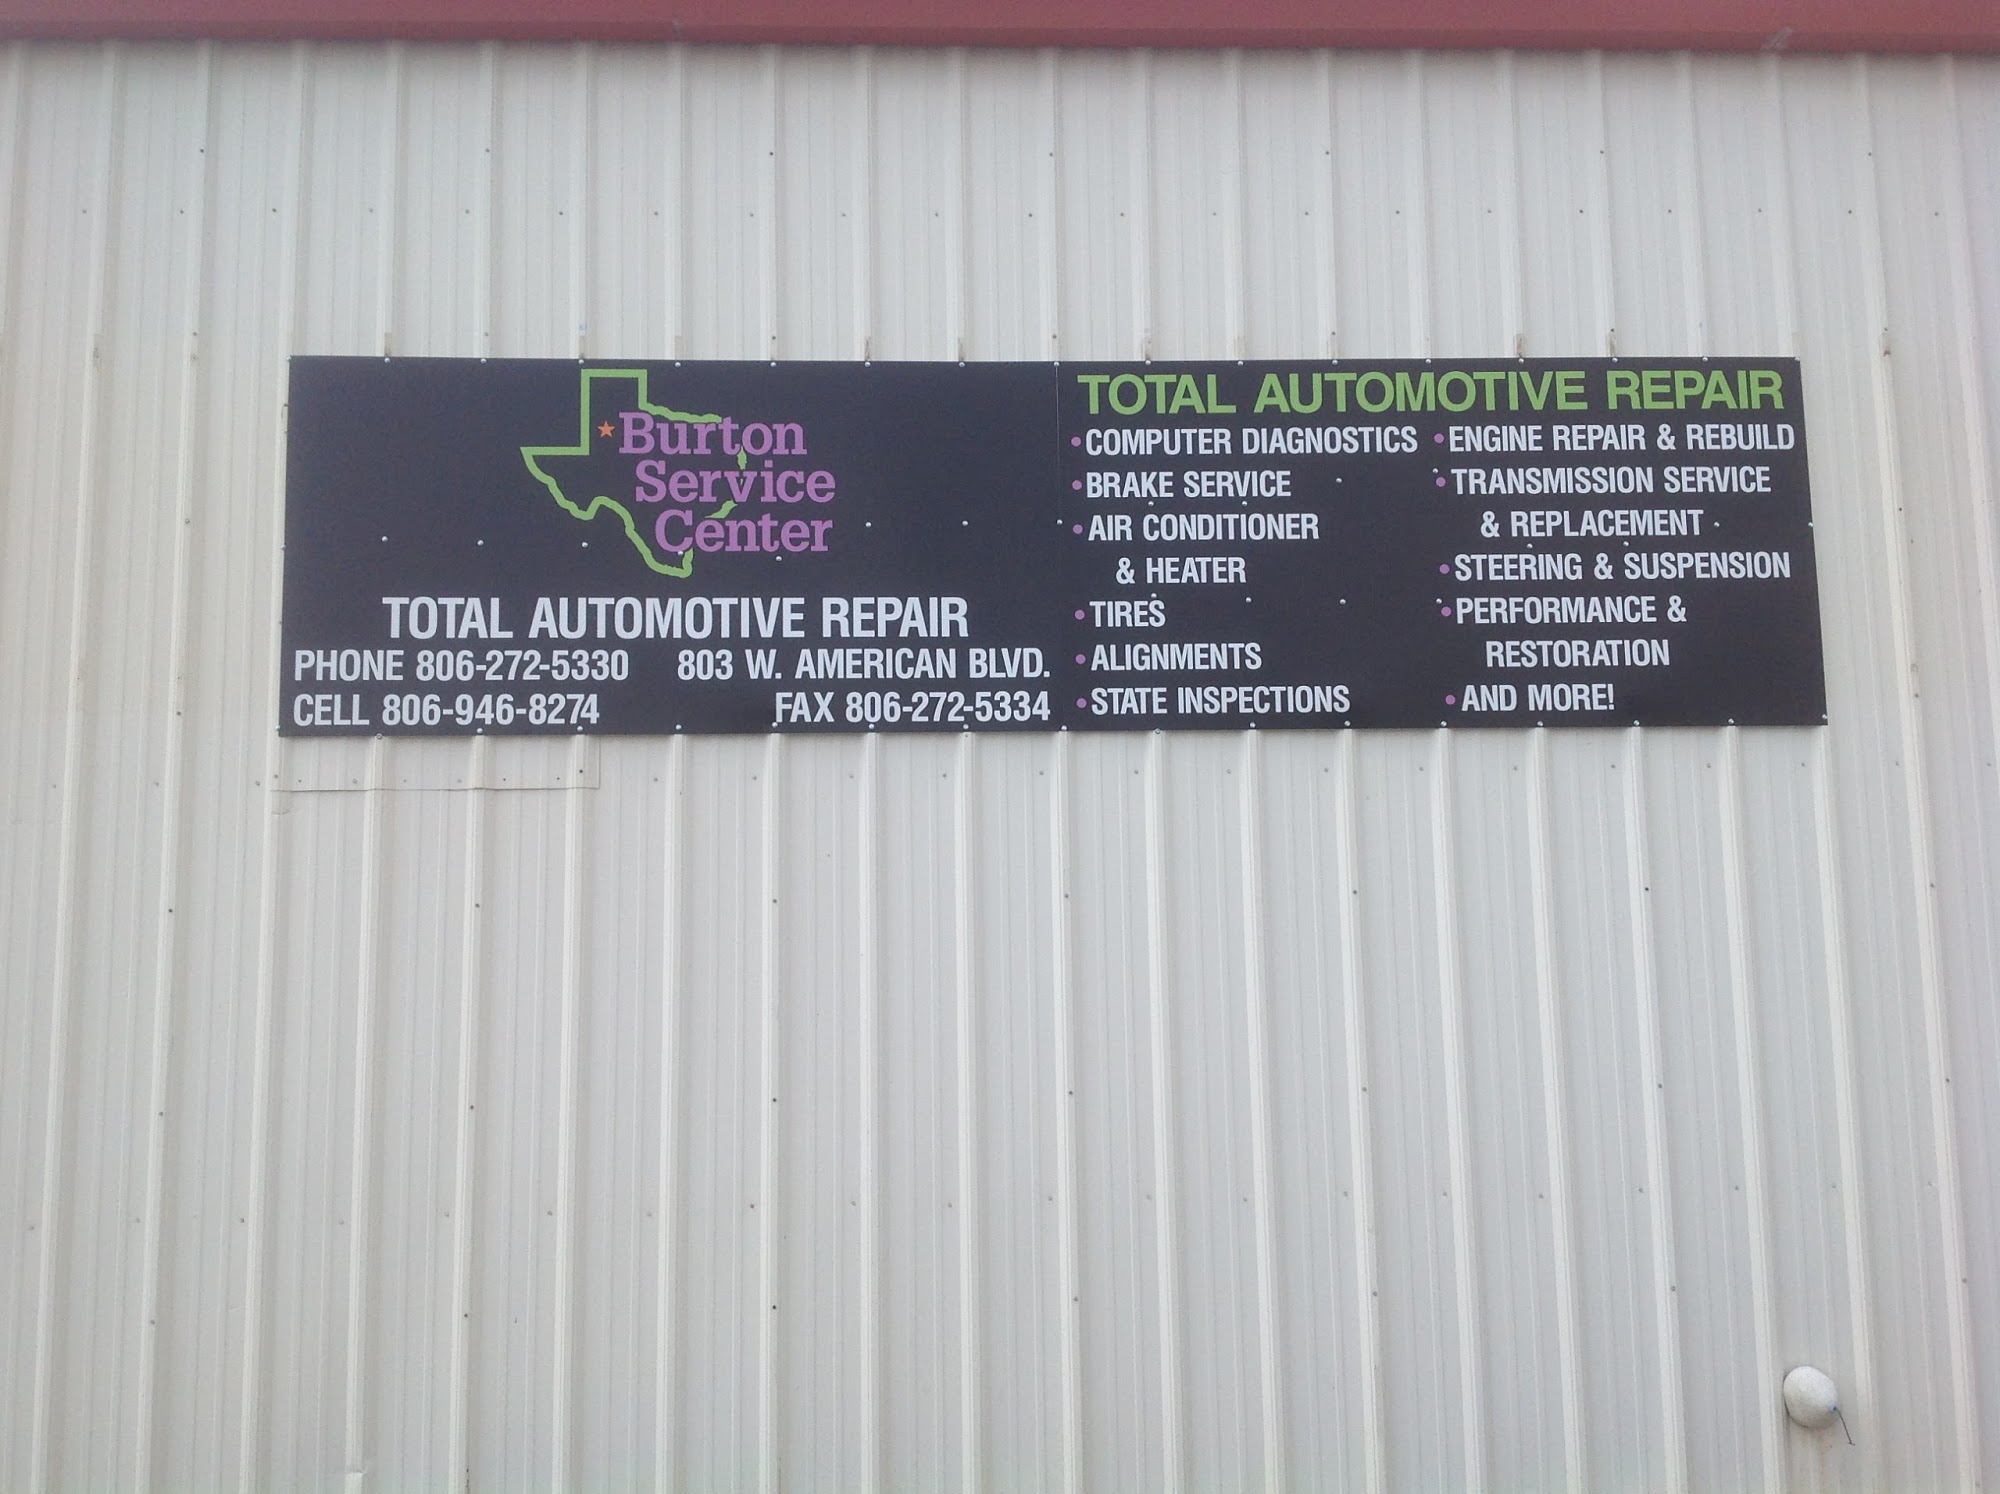 Burton Service Center - Total Automotive Repair